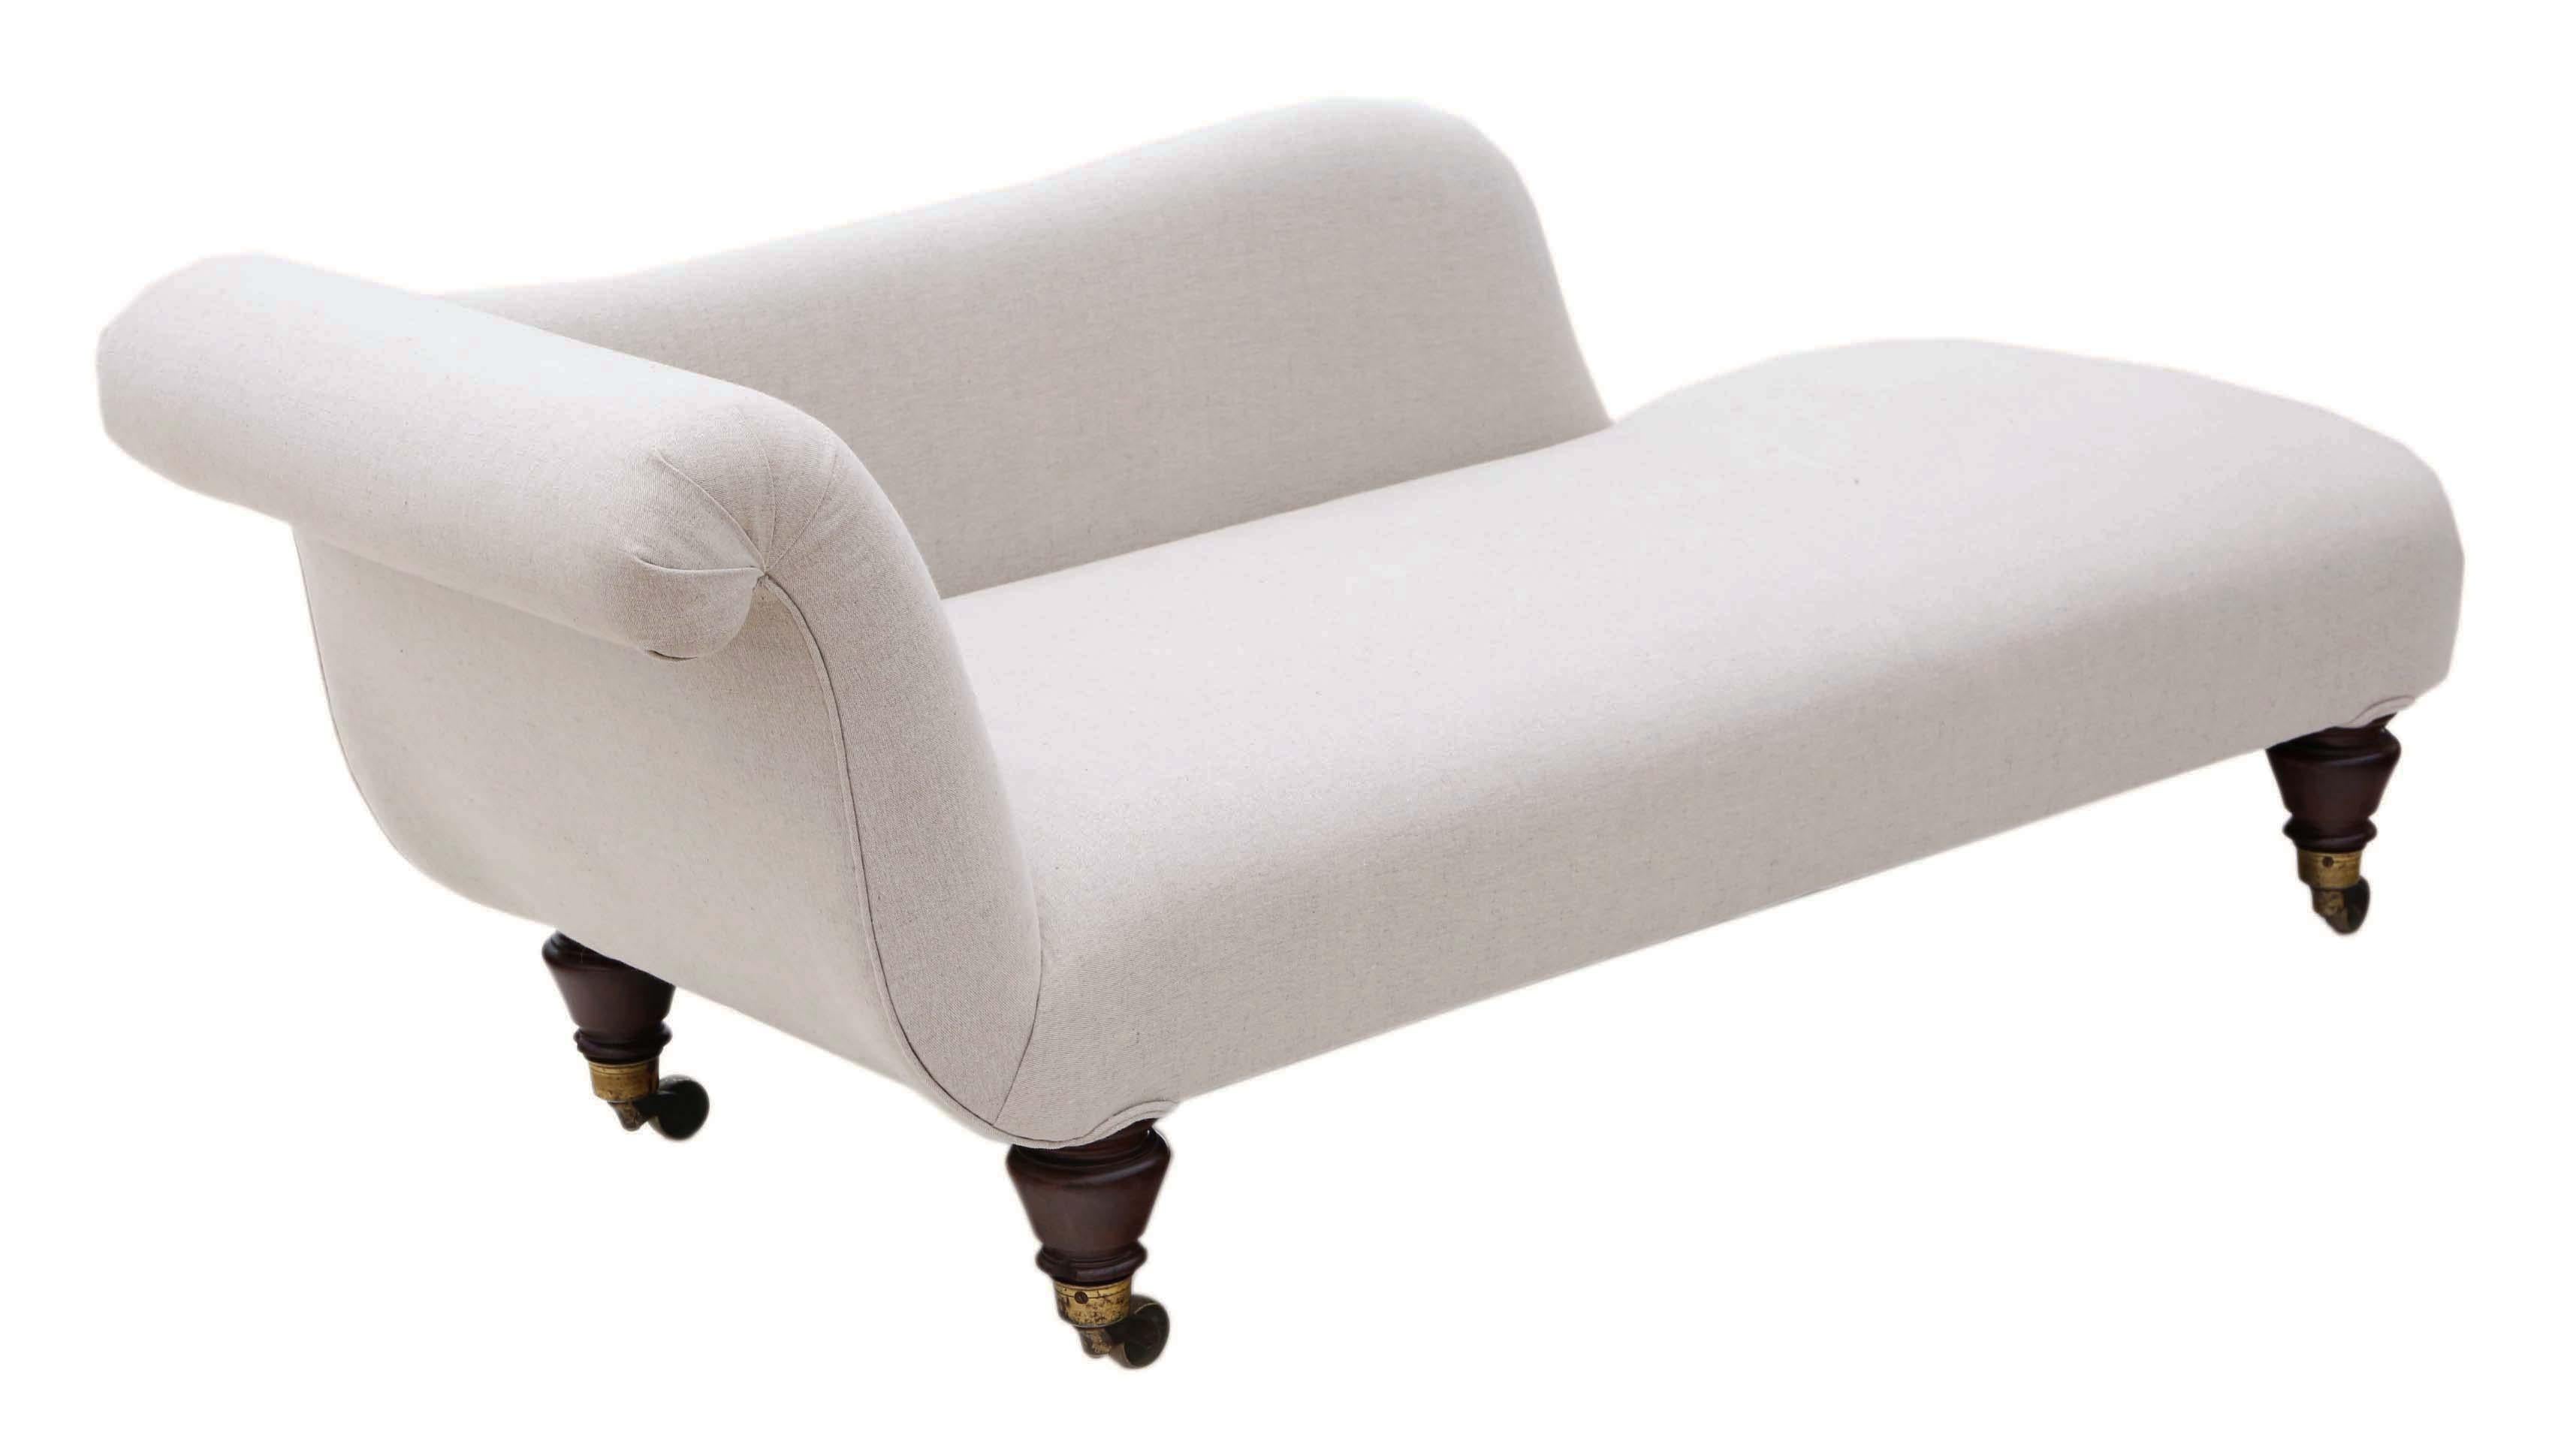 Upholstery Antique Regency William IV circa 1830 Chaise Longue Sofa